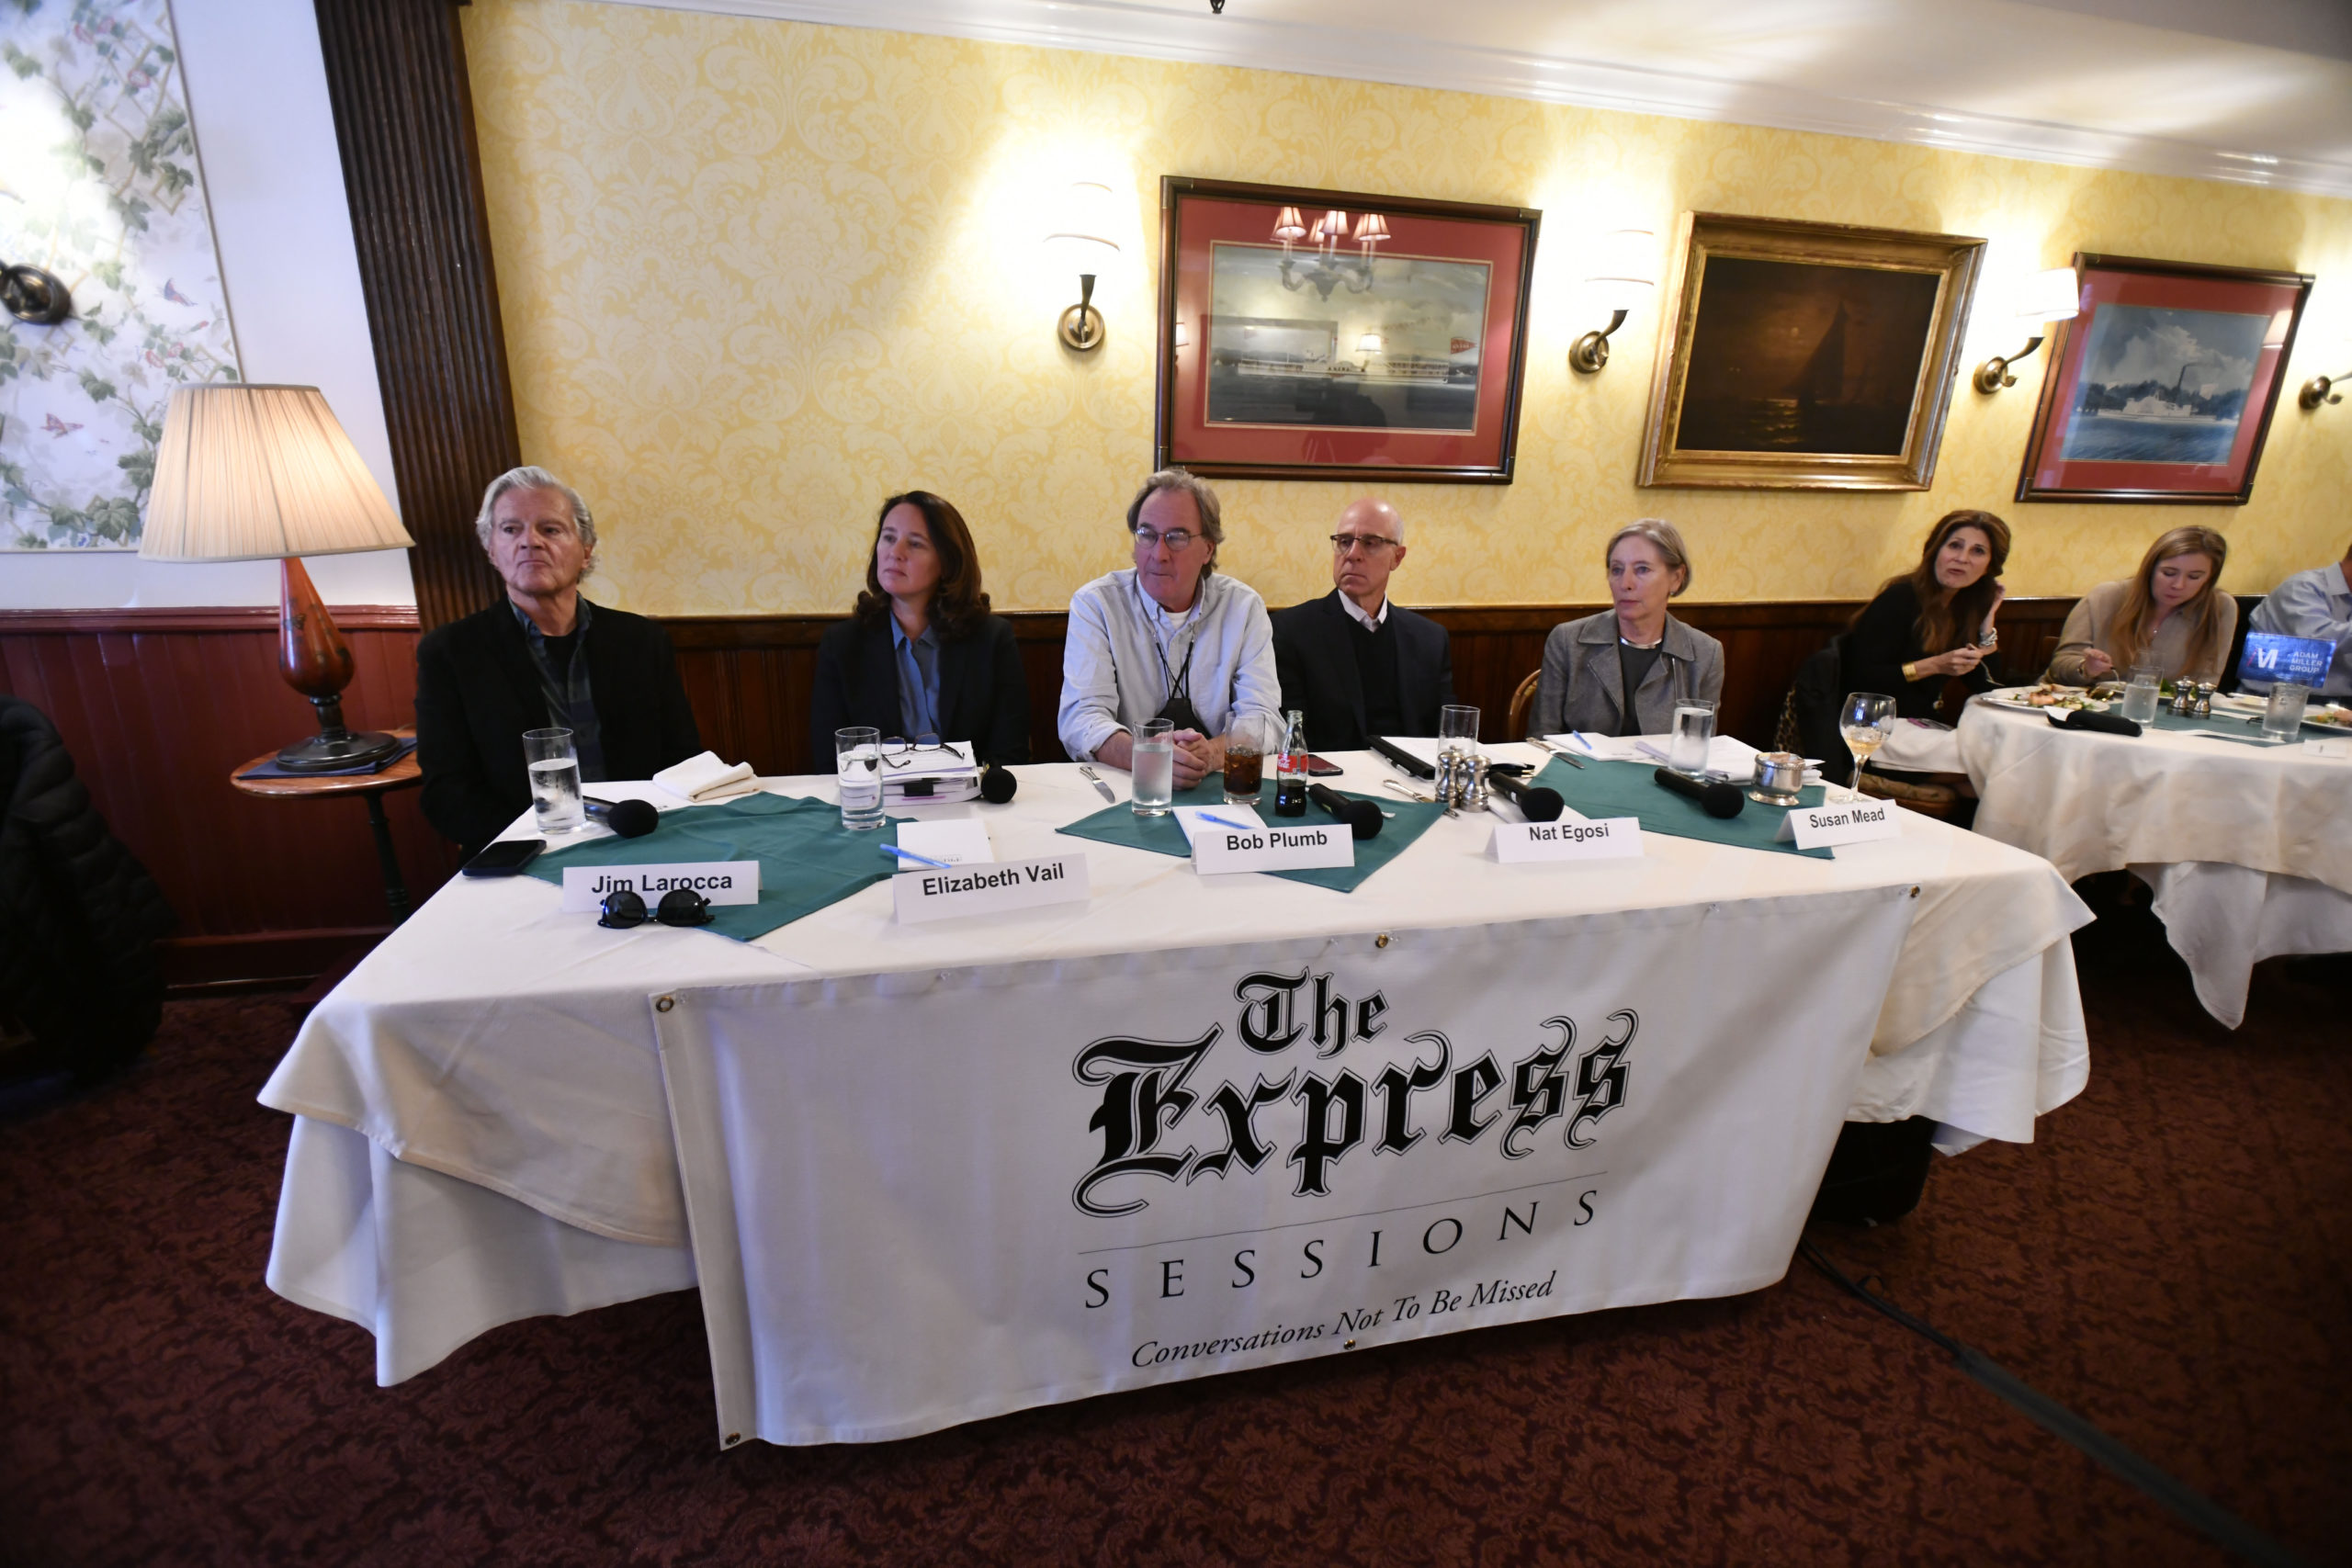 Express Session panelists Jim Larocca, Elizabeth Vail, Bob Plumb, Nat Egosi and Susan Mead at the American Hotel on Thursday.  DANA SHAW